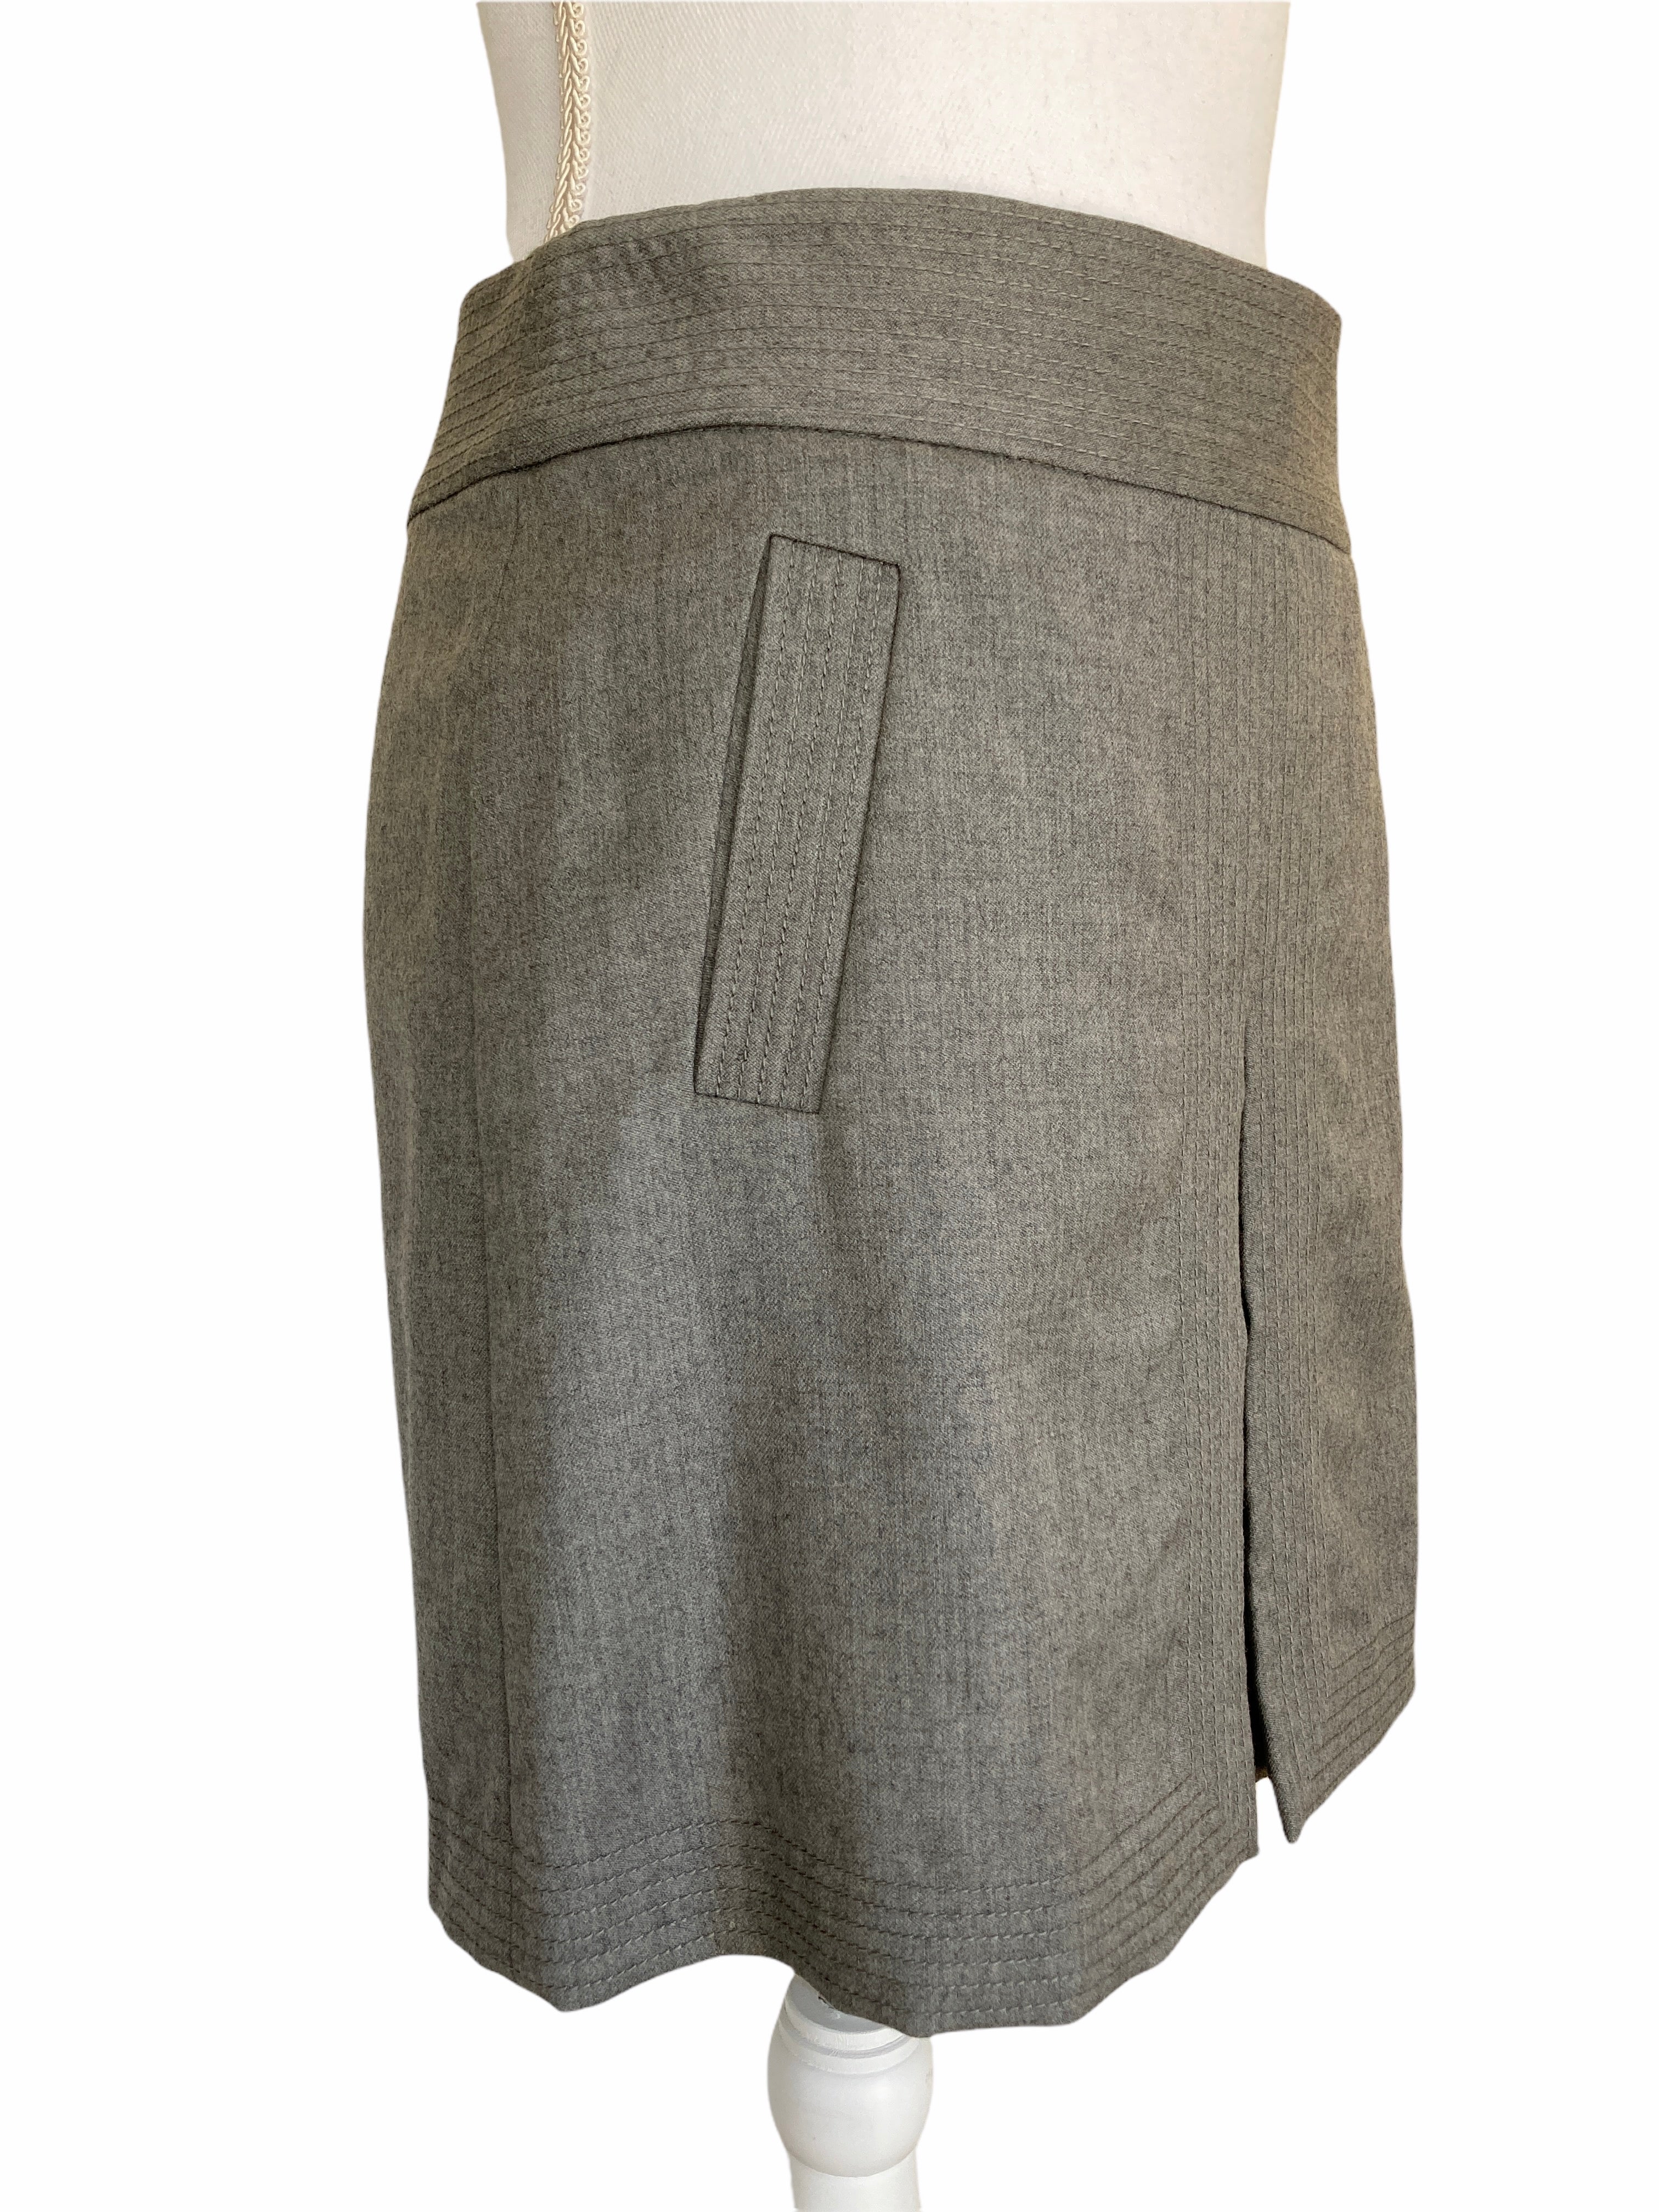 J. Crew Charcoal Wool Skirt, 0